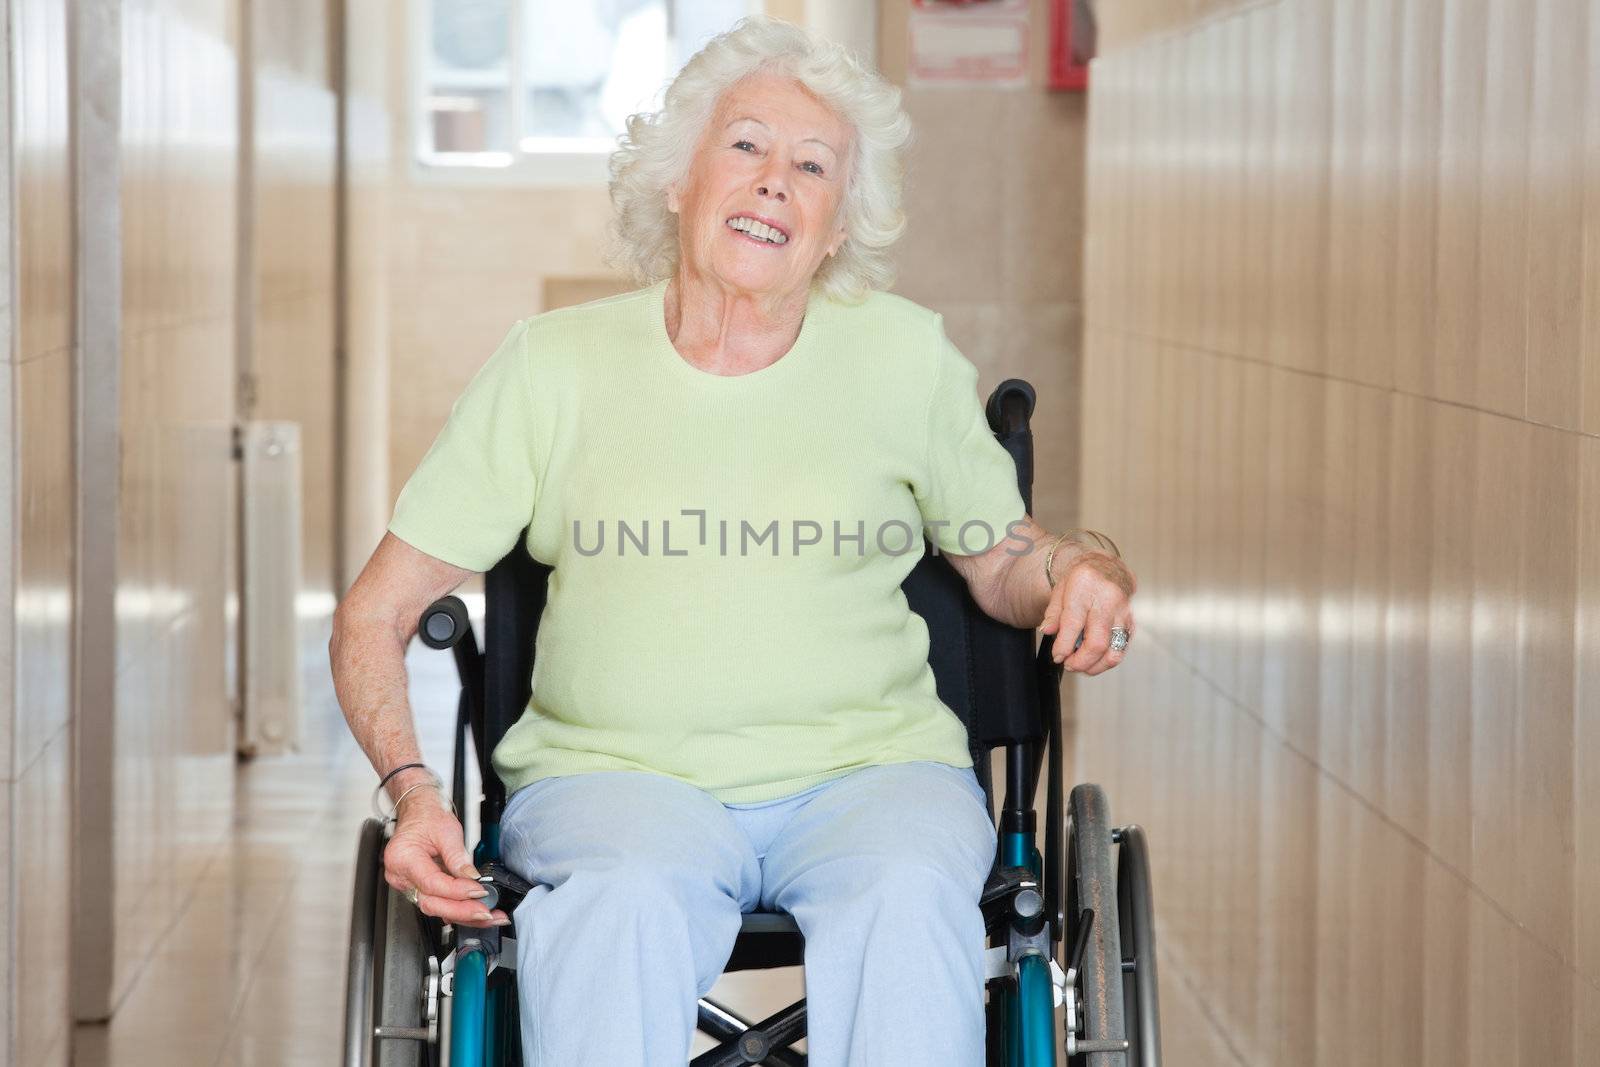 Happy senior woman sitting in a wheel chair at hospital corridor